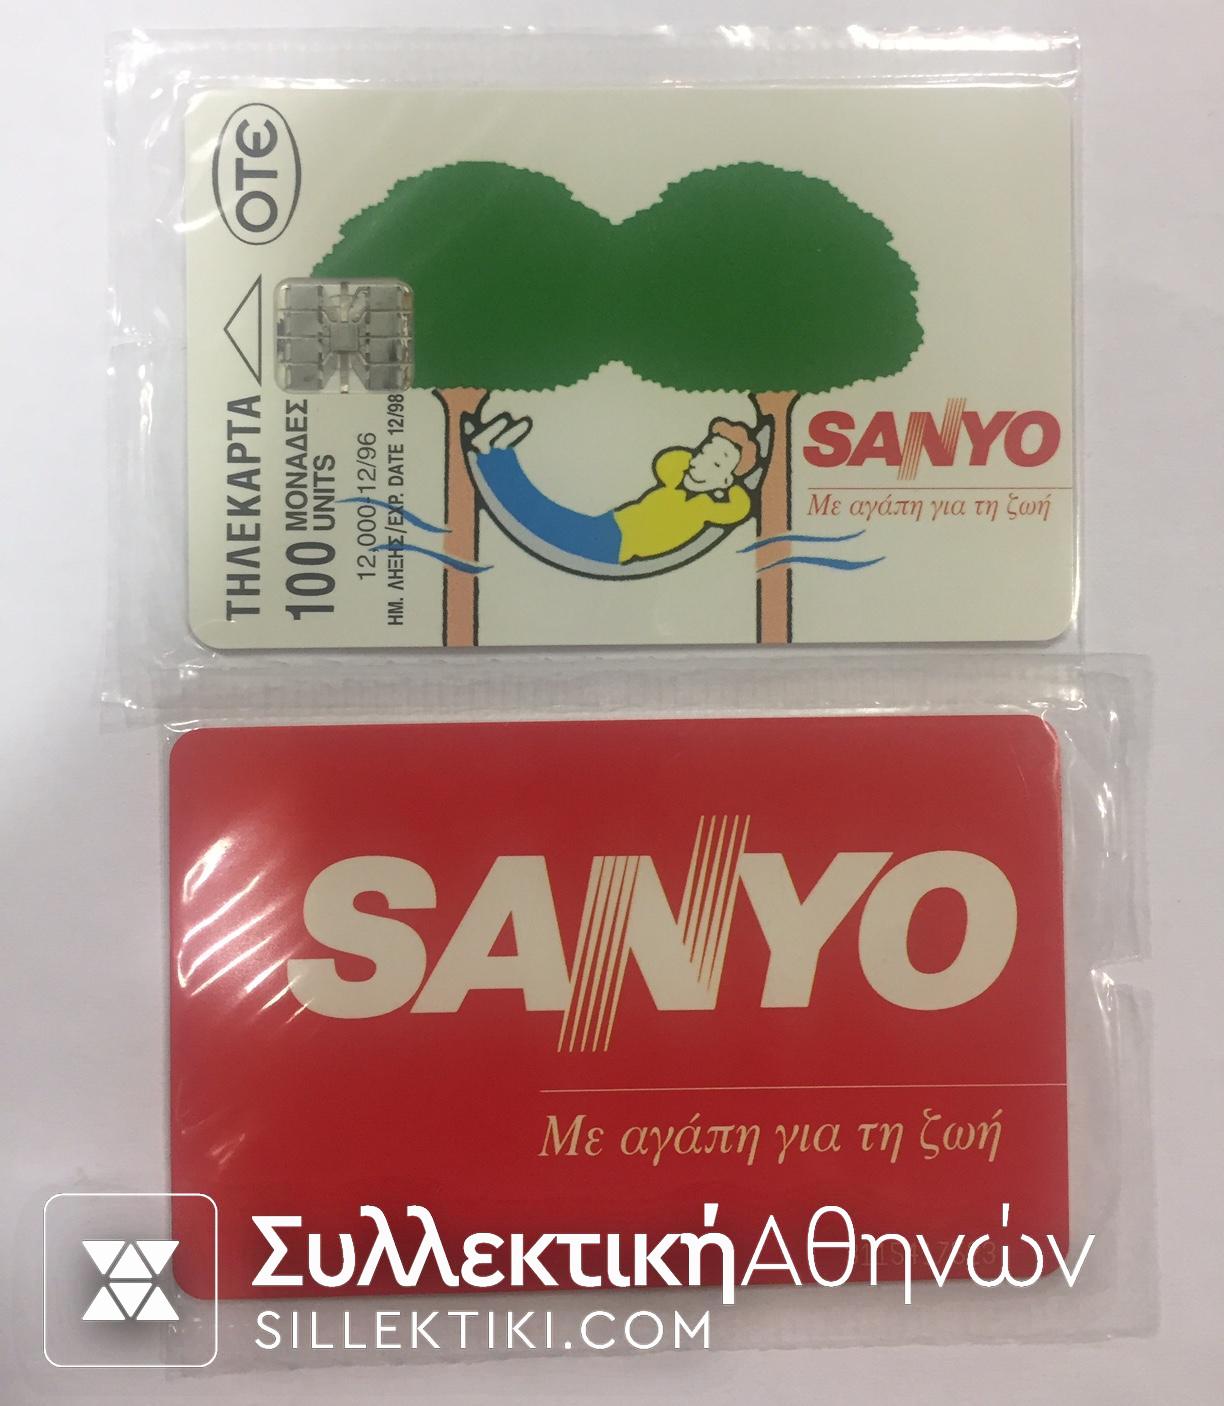 Sanyo 12/1996